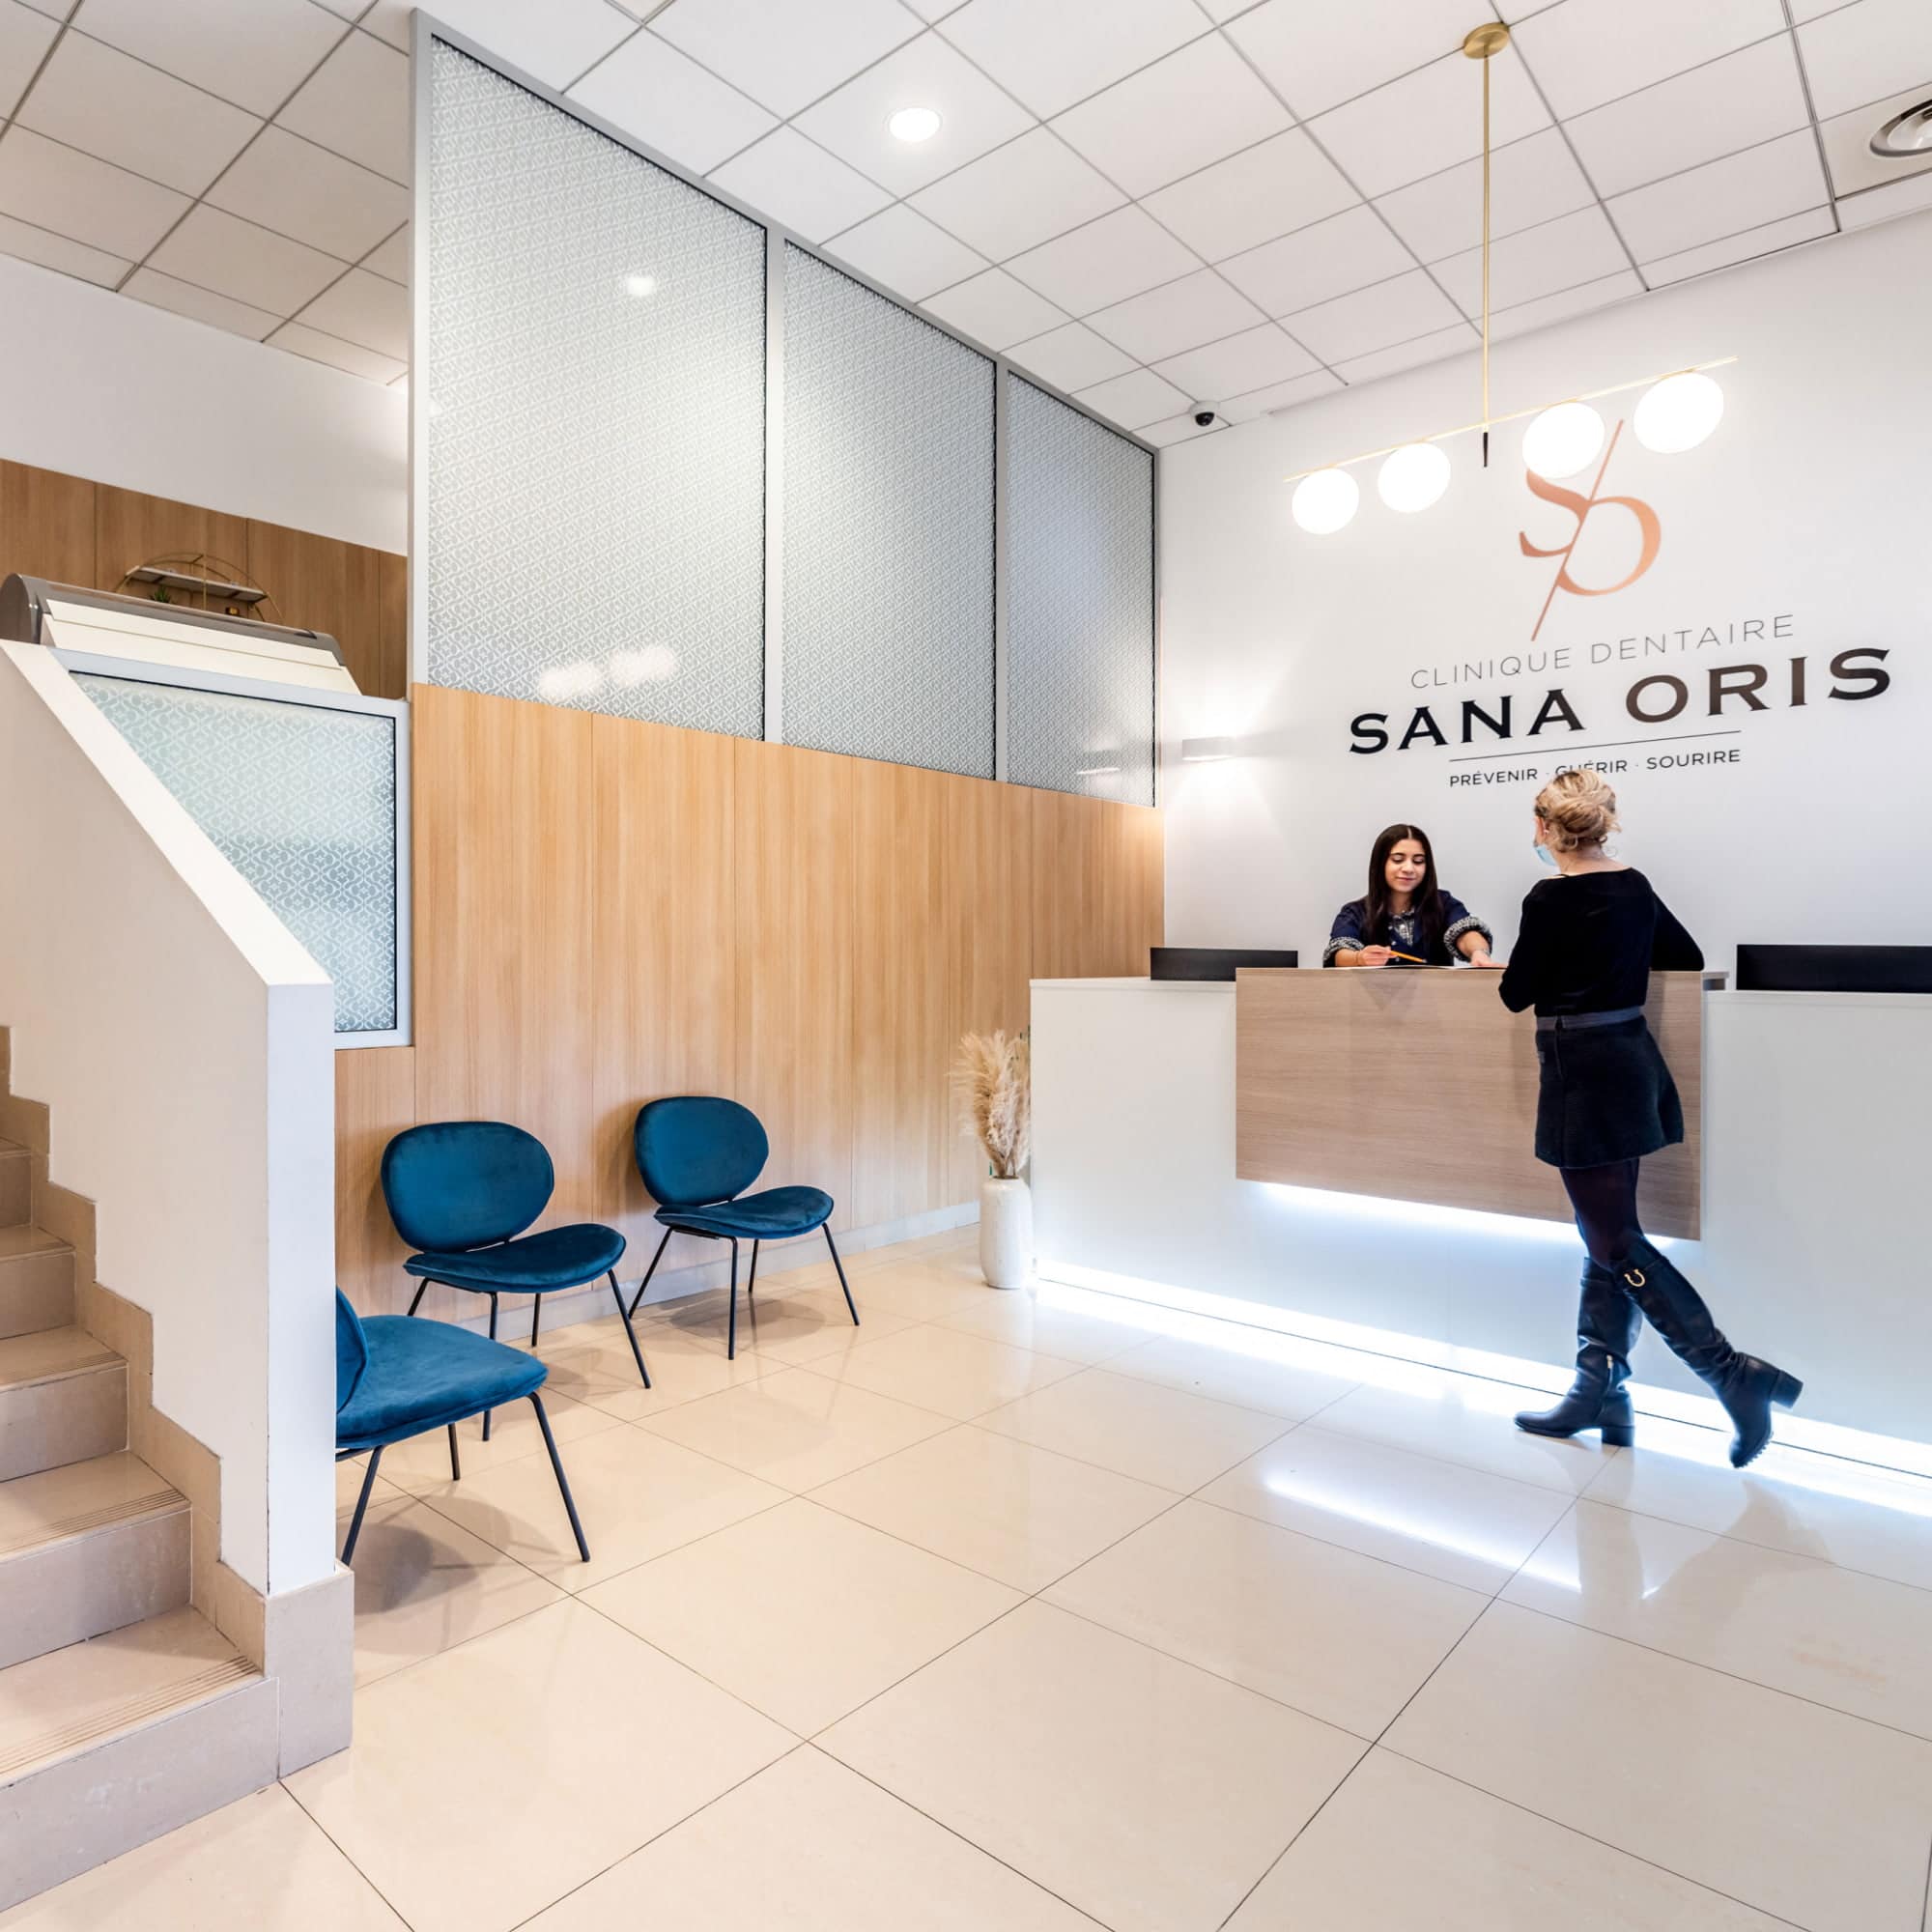 La clinique dentaire Sana Oris | Surgery, orthodontics and endodontics | Paris 8